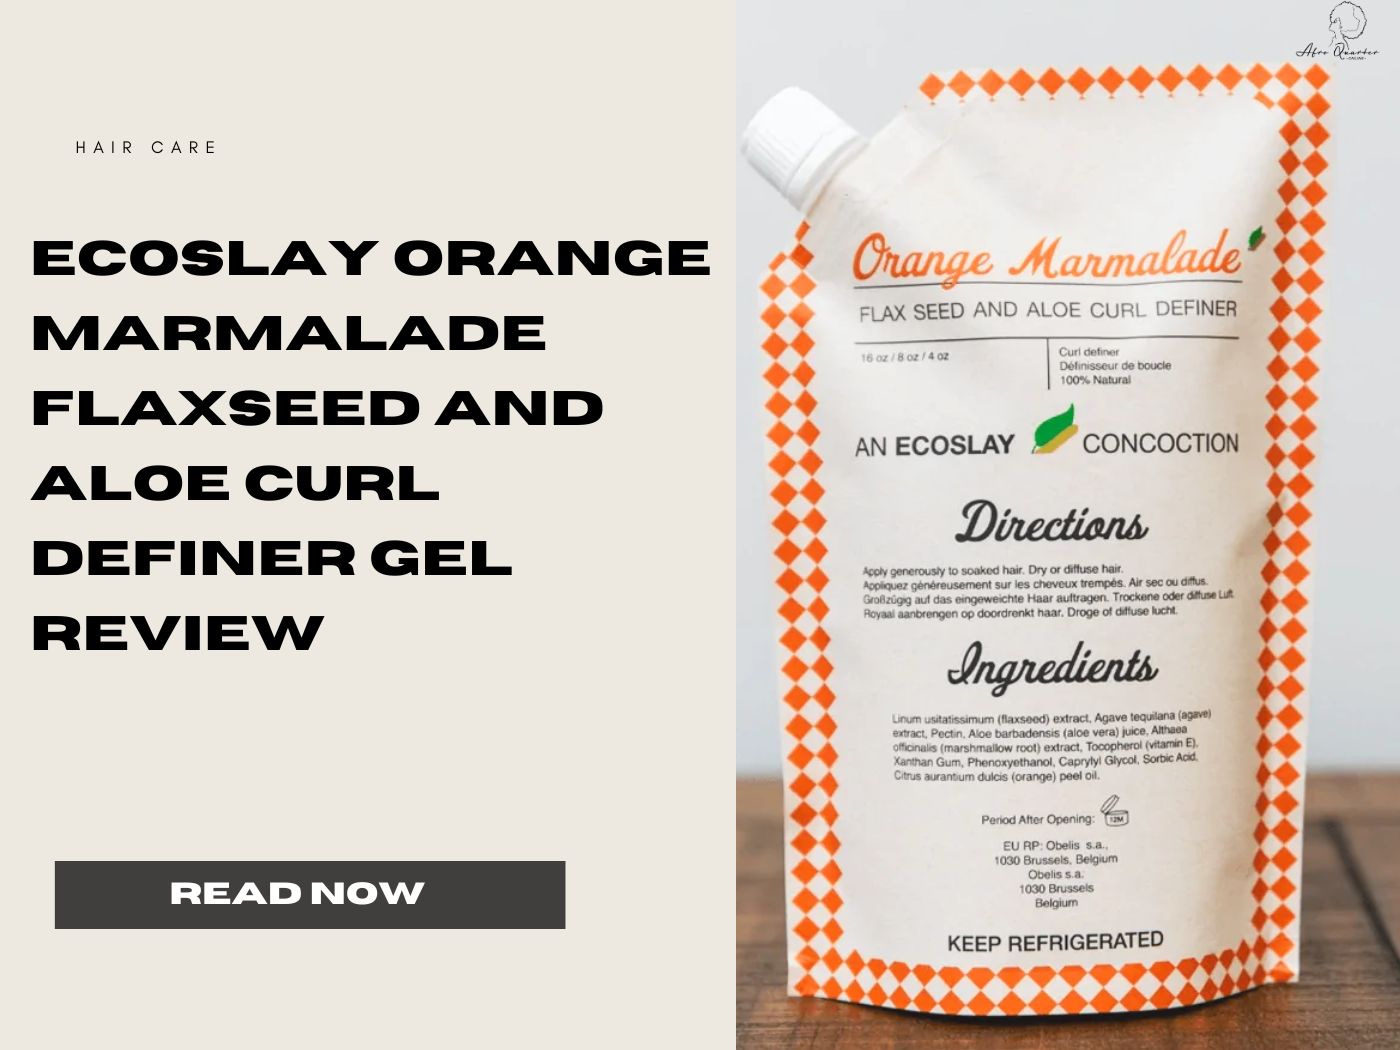 Review- Ecoslay Orange Marmalade Flaxseed and Aloe Curl Definer Gel